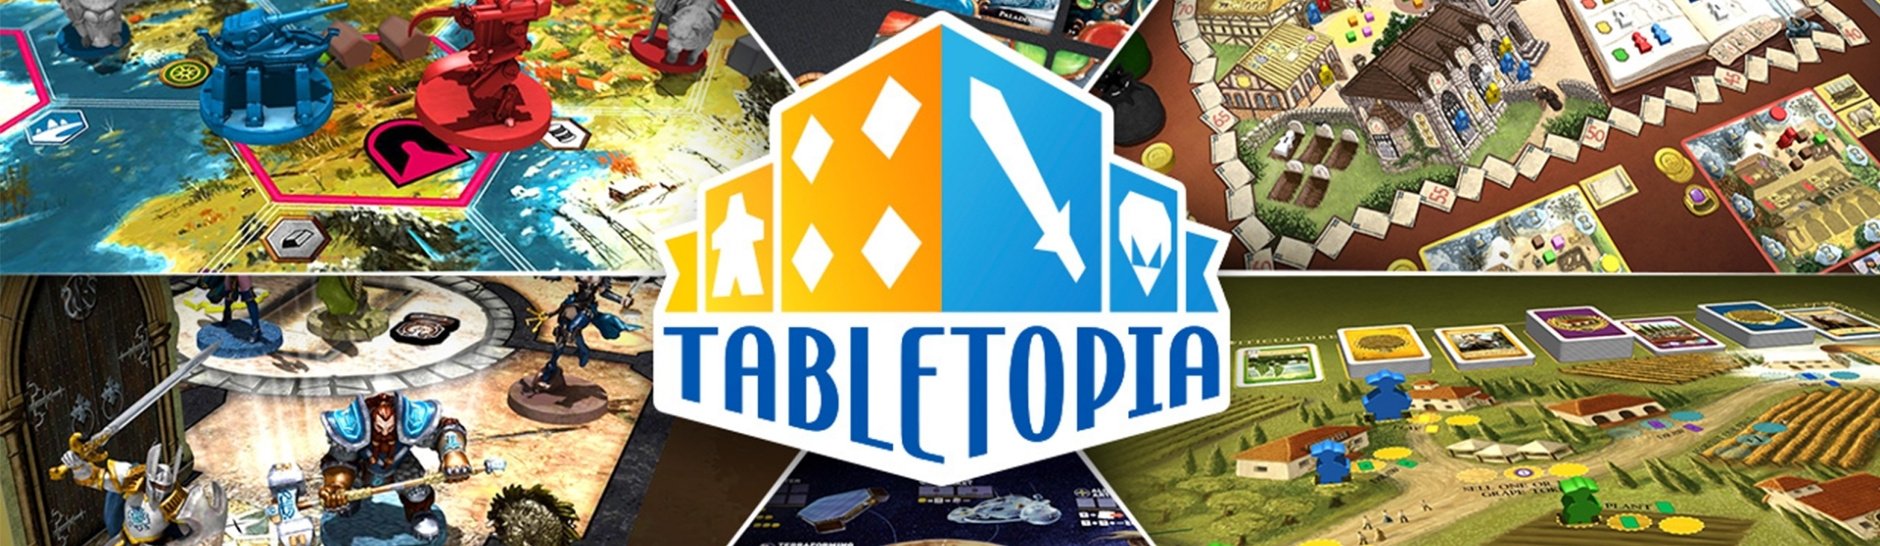 Tabletopia Banner Logo